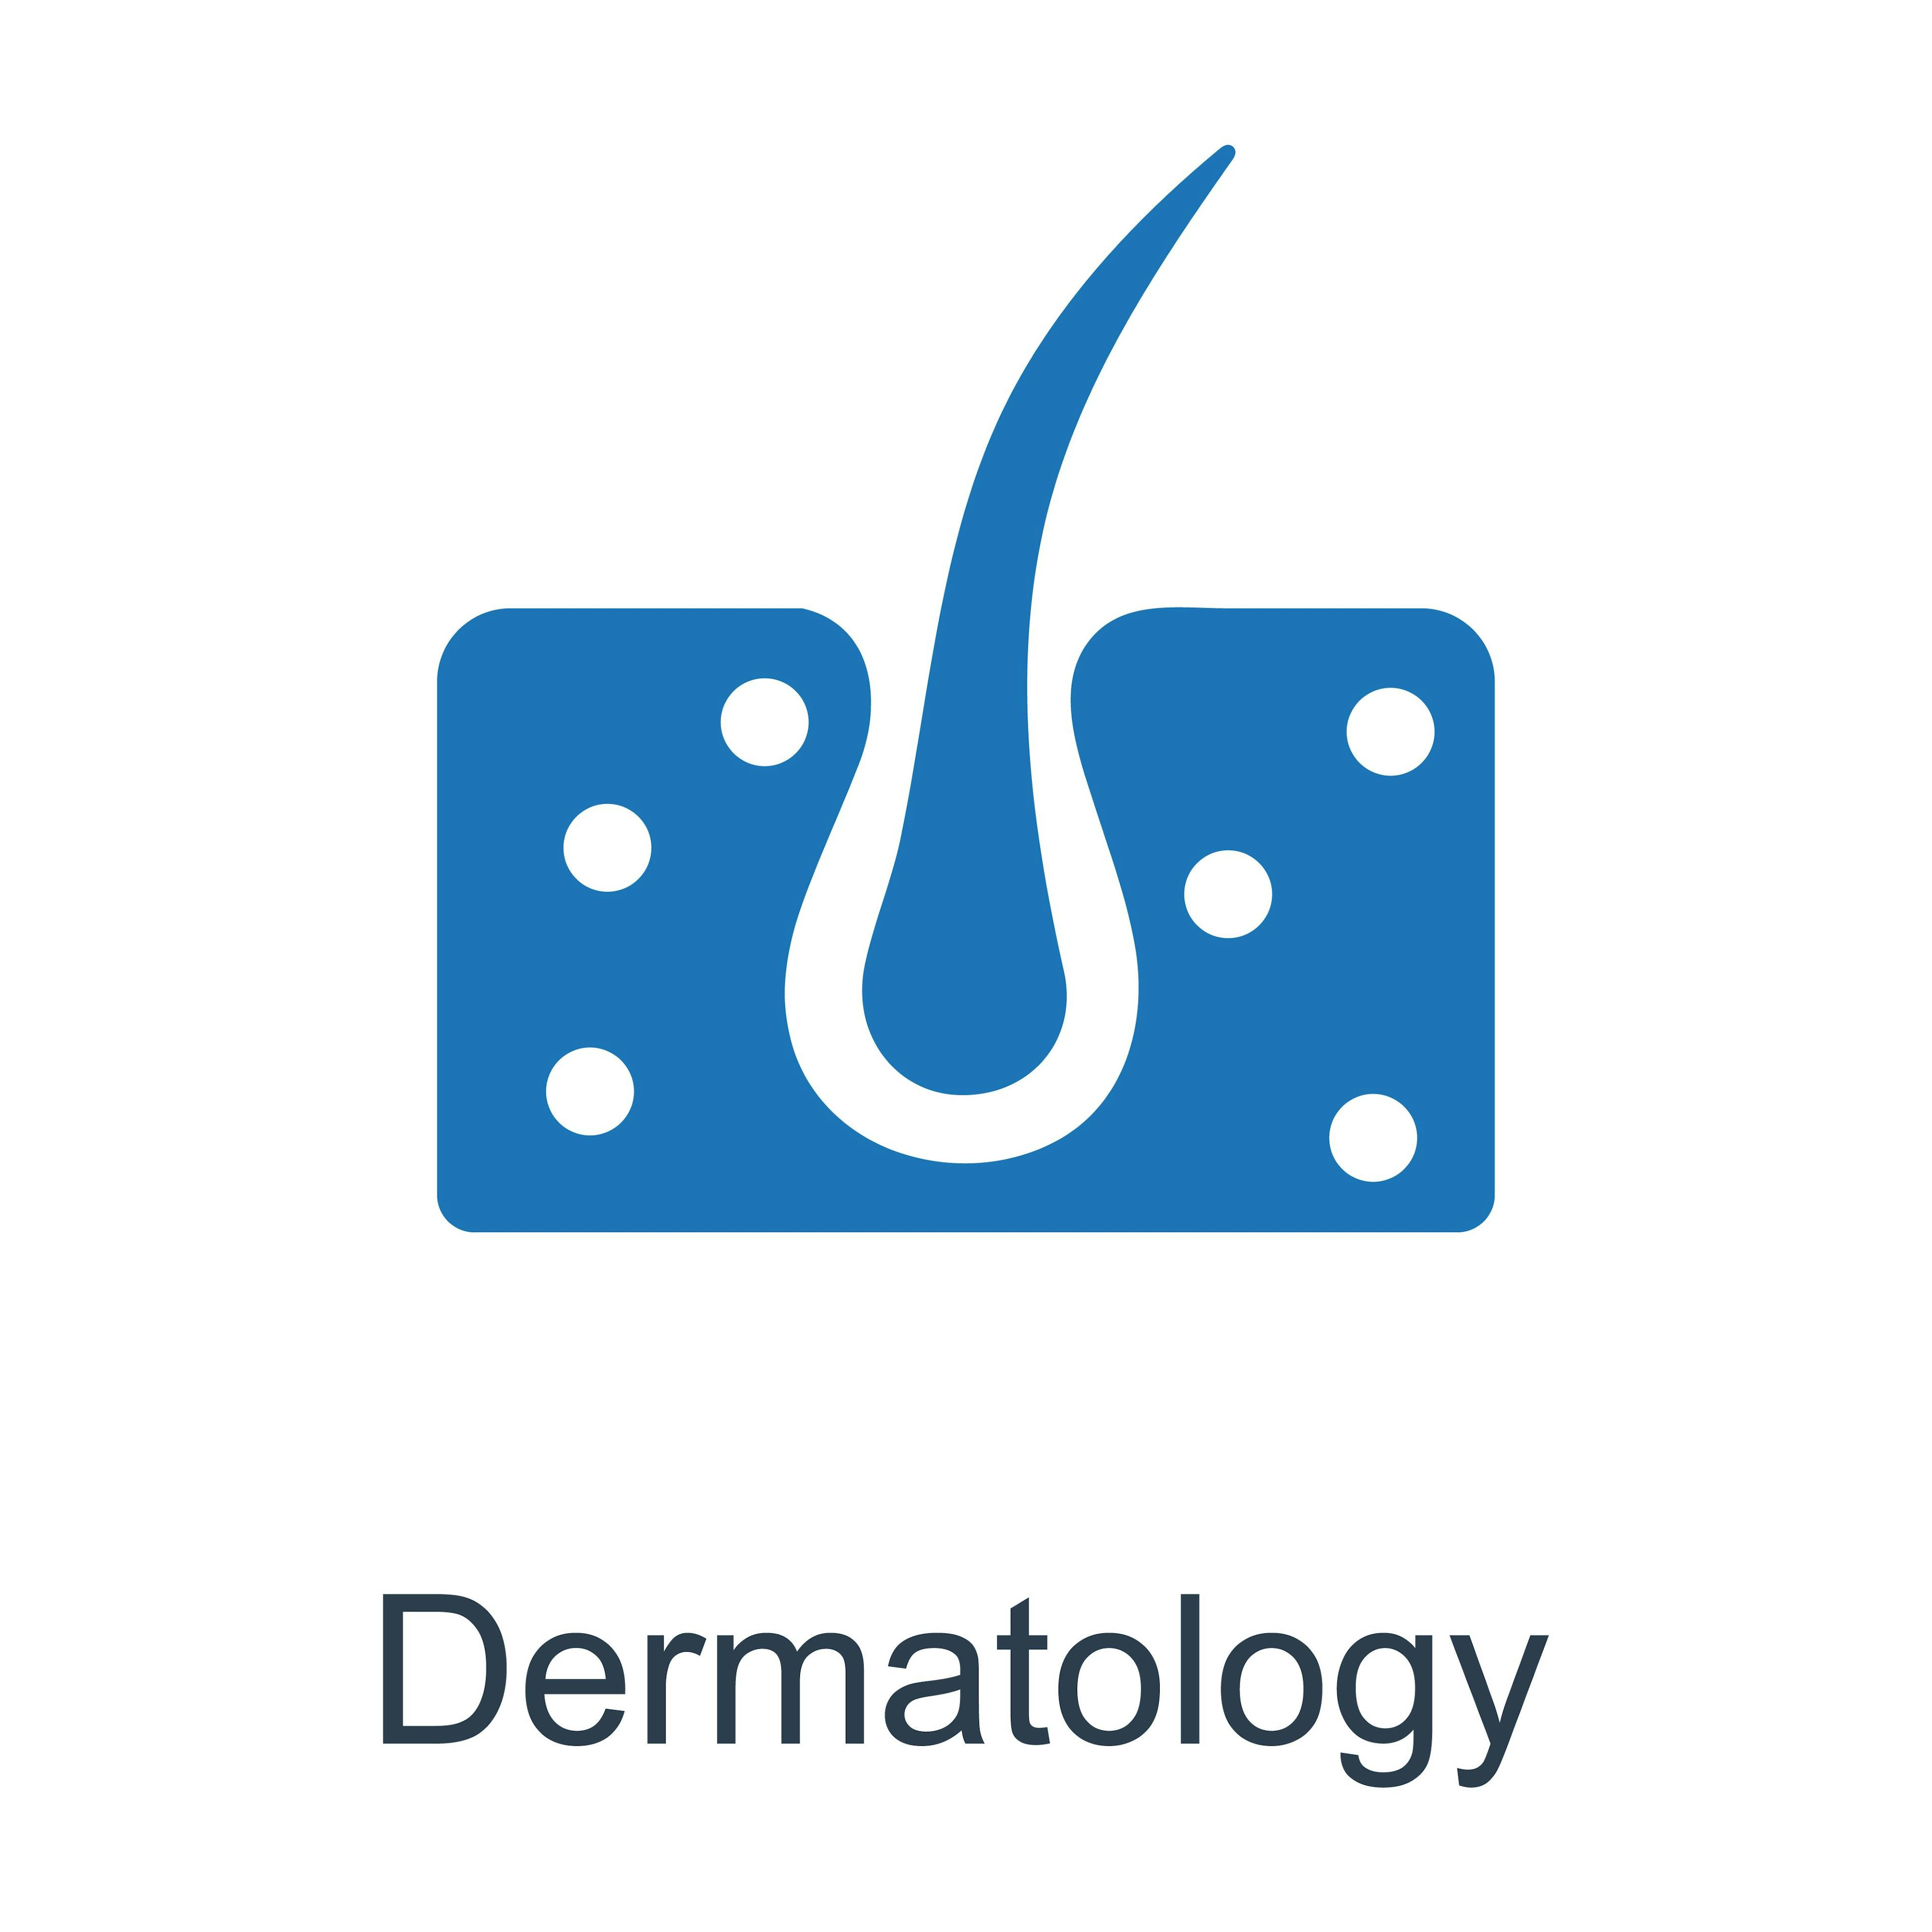 Dermatology graphic